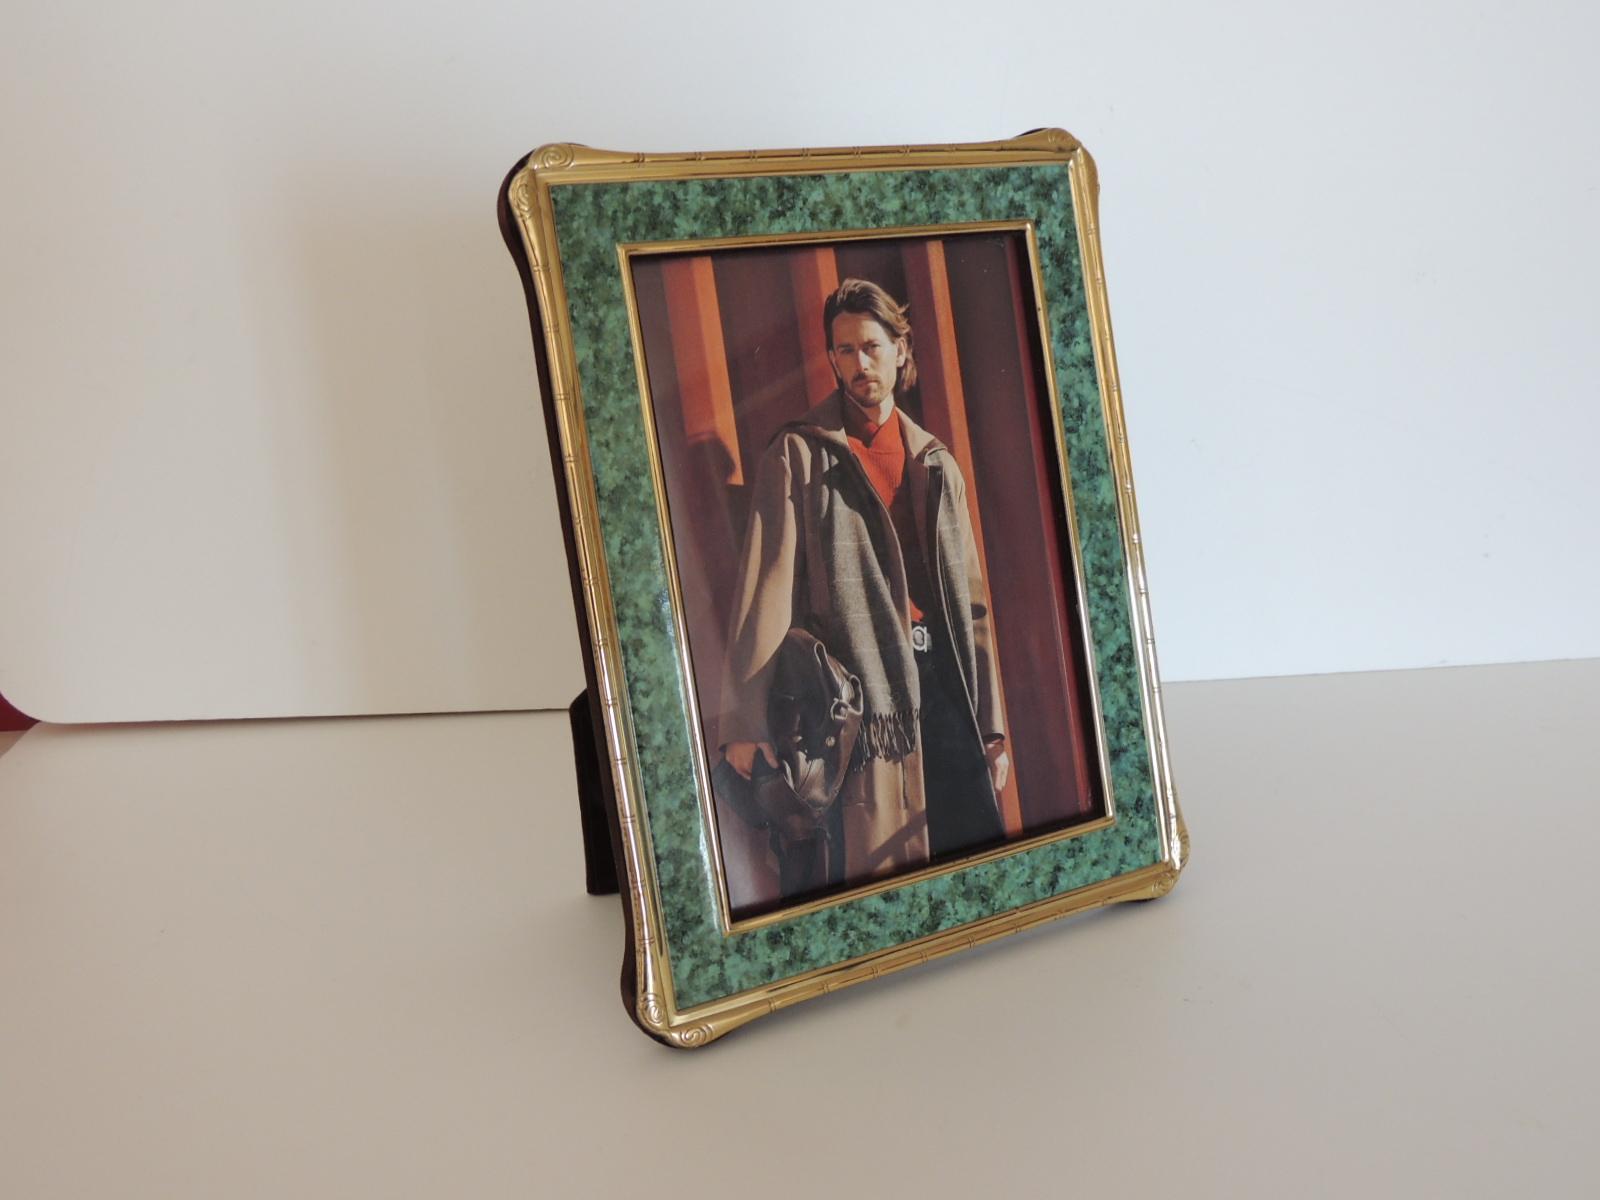 Vintage Green Malachite Finish Decorative Picture Frame.
Picture size: 4.75